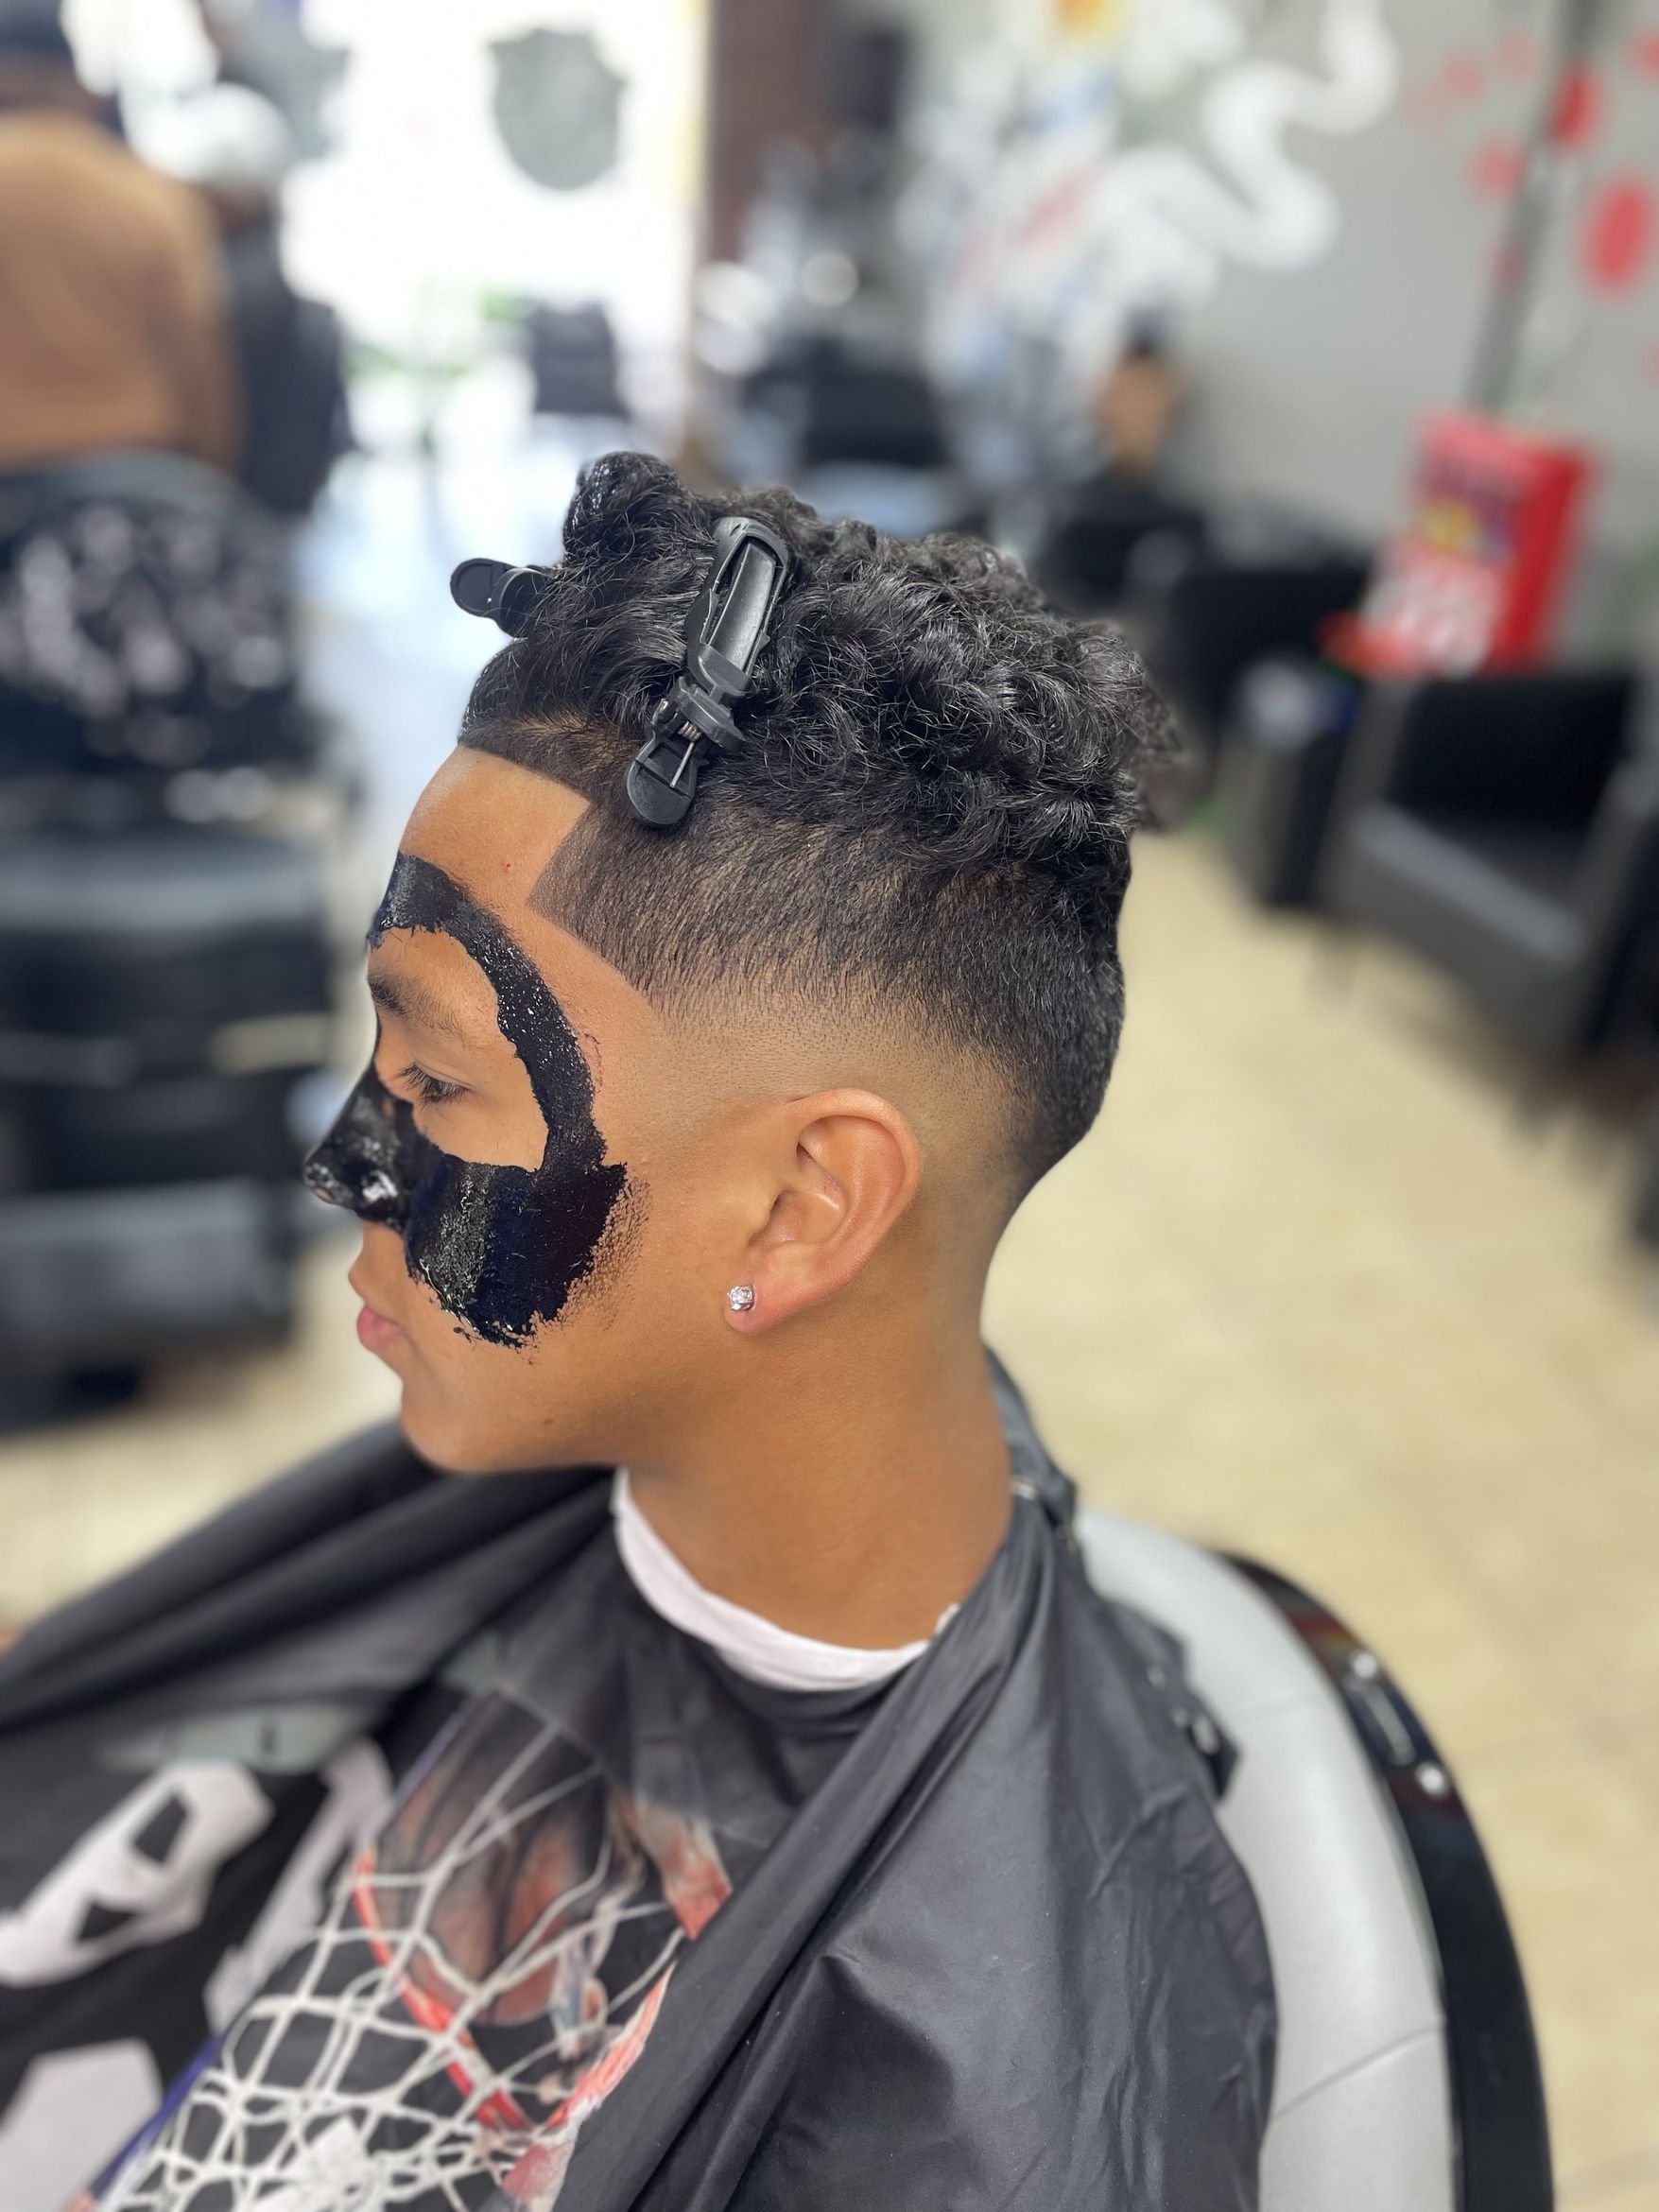 Brazilian Barber